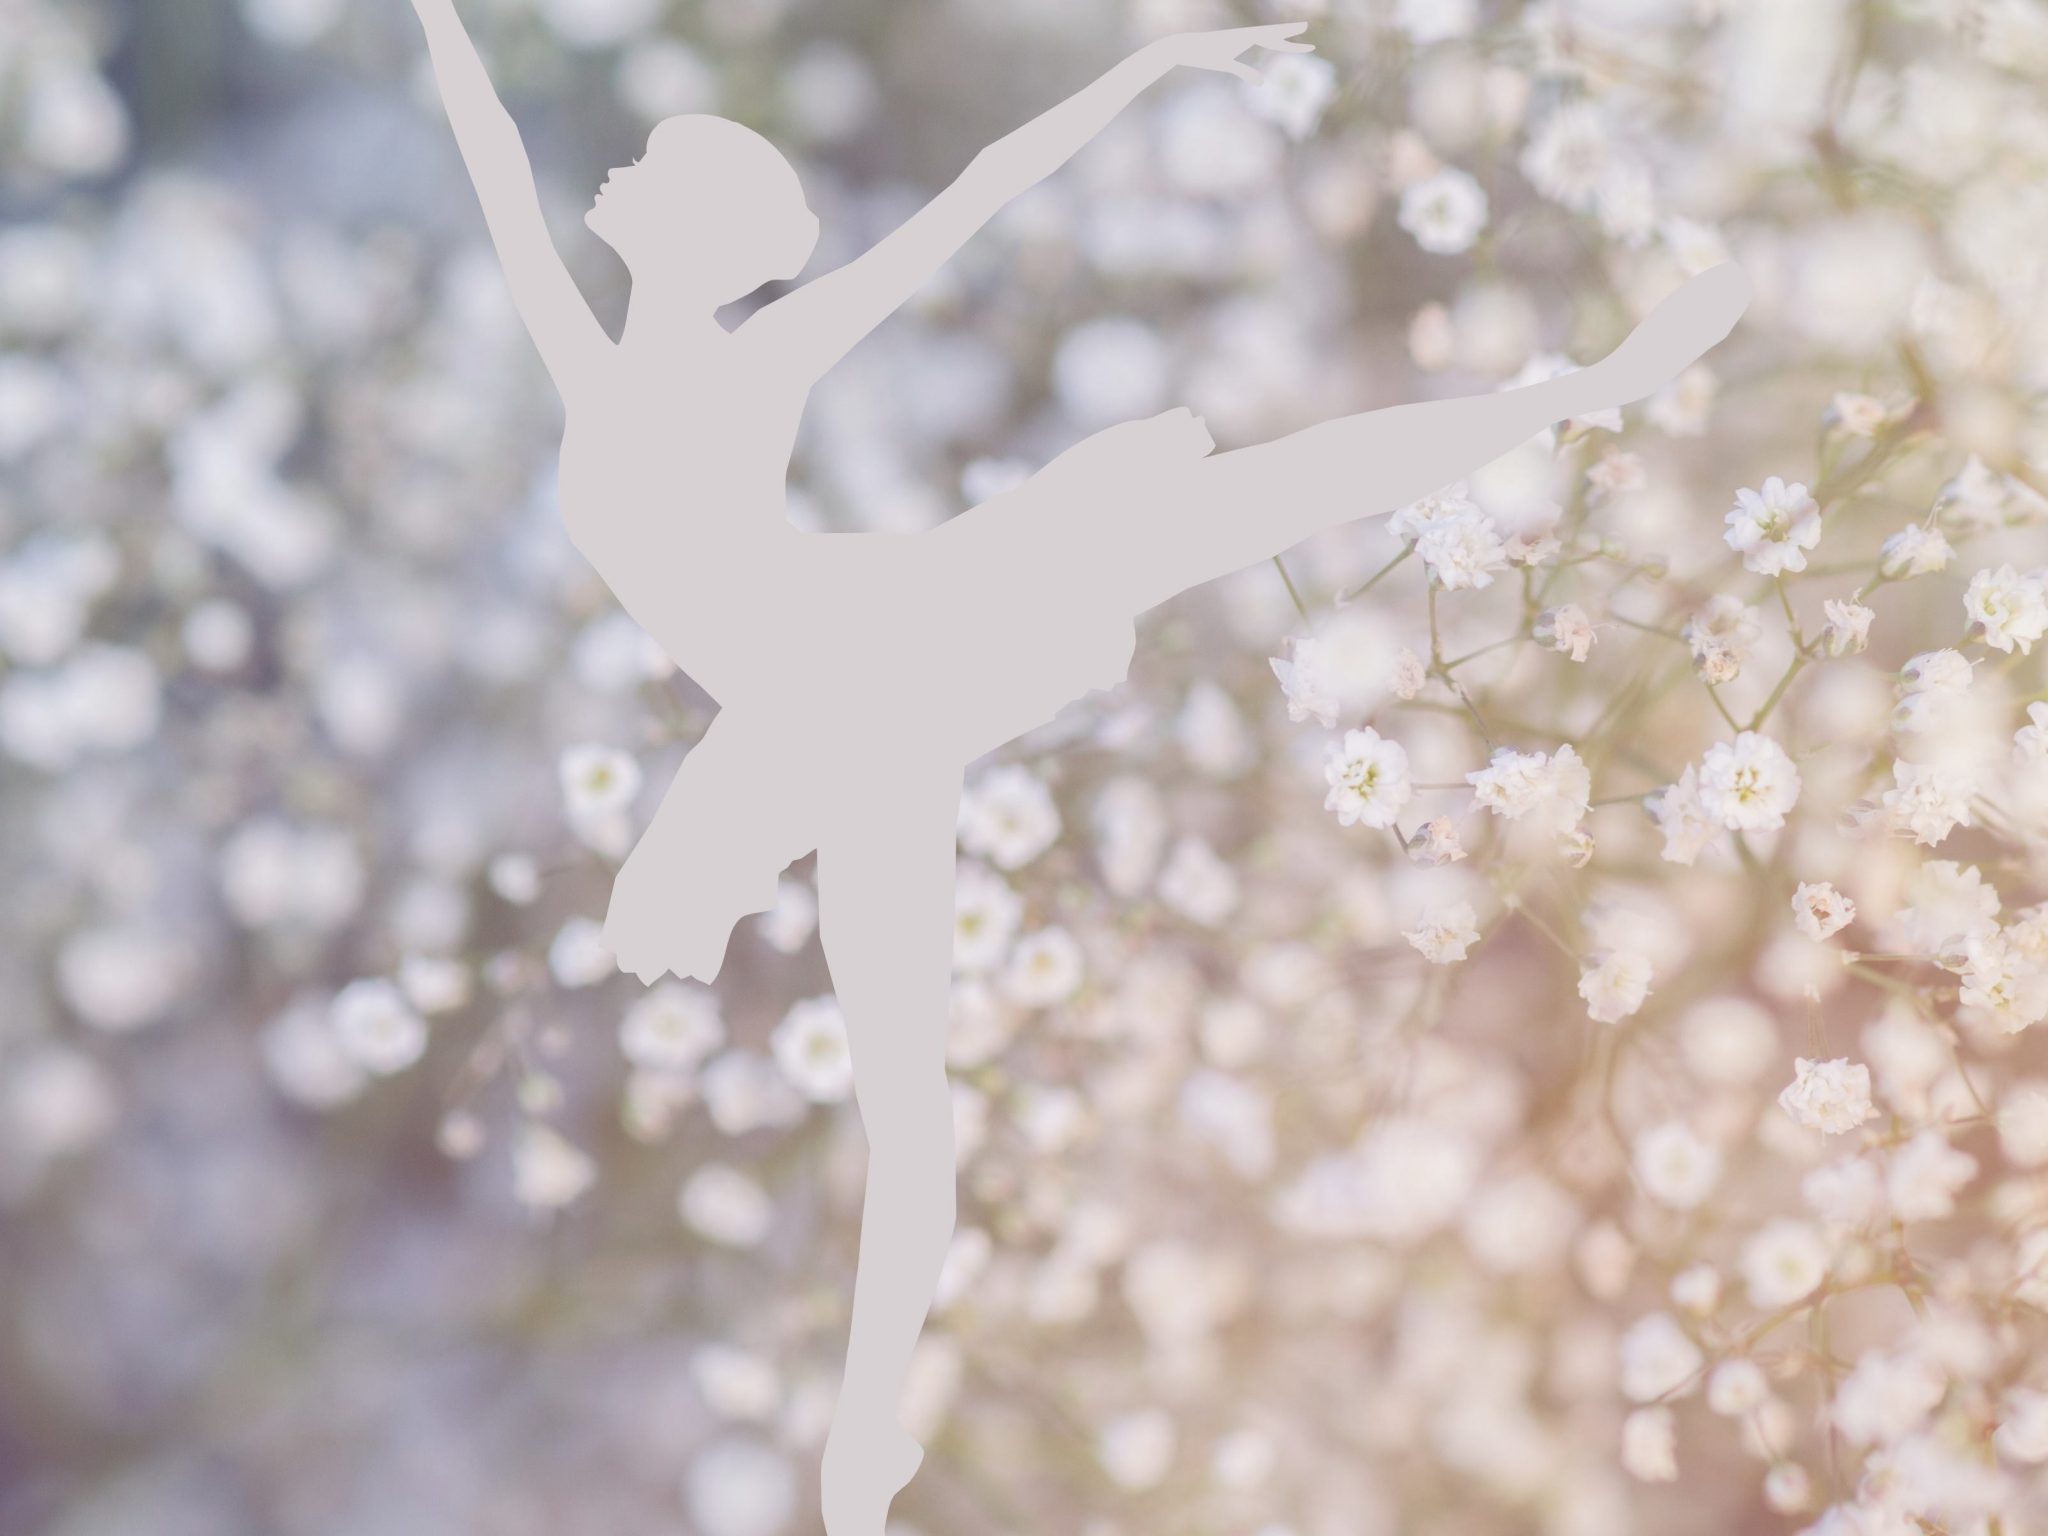 2048x1536 wallpaper Ballerina Girl Dance White Dandelion Flowers iPad Wallpaper 2048x1536 pixels resolution